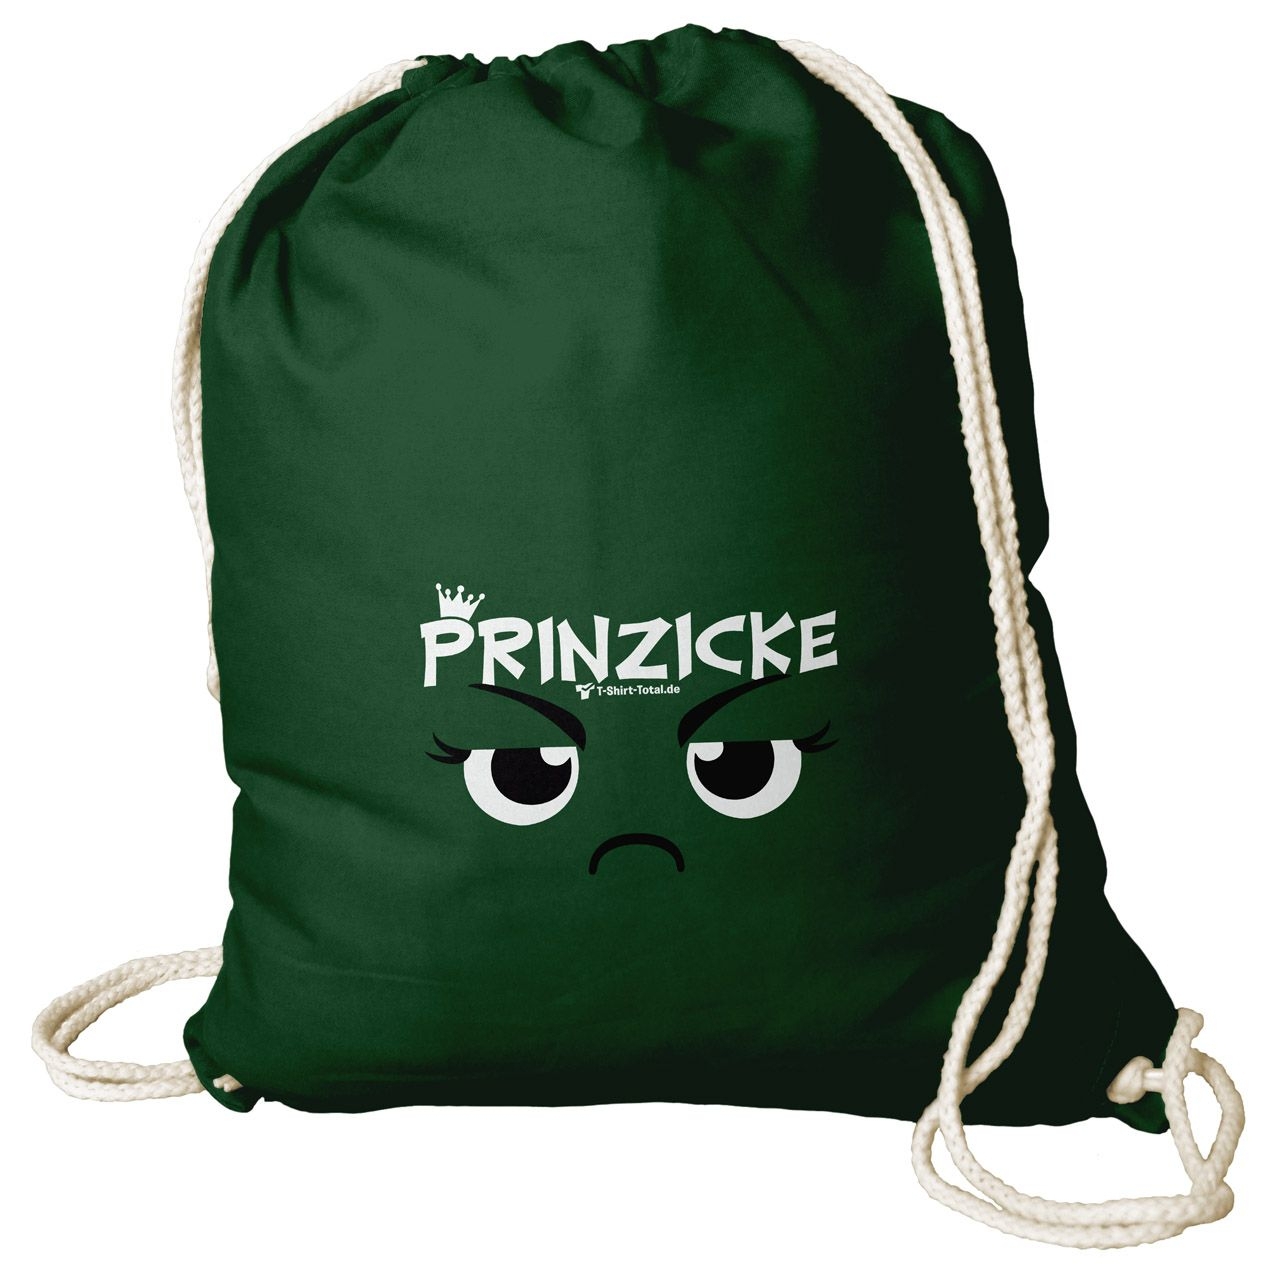 Prinzicke Rucksack Beutel dunkelgrün